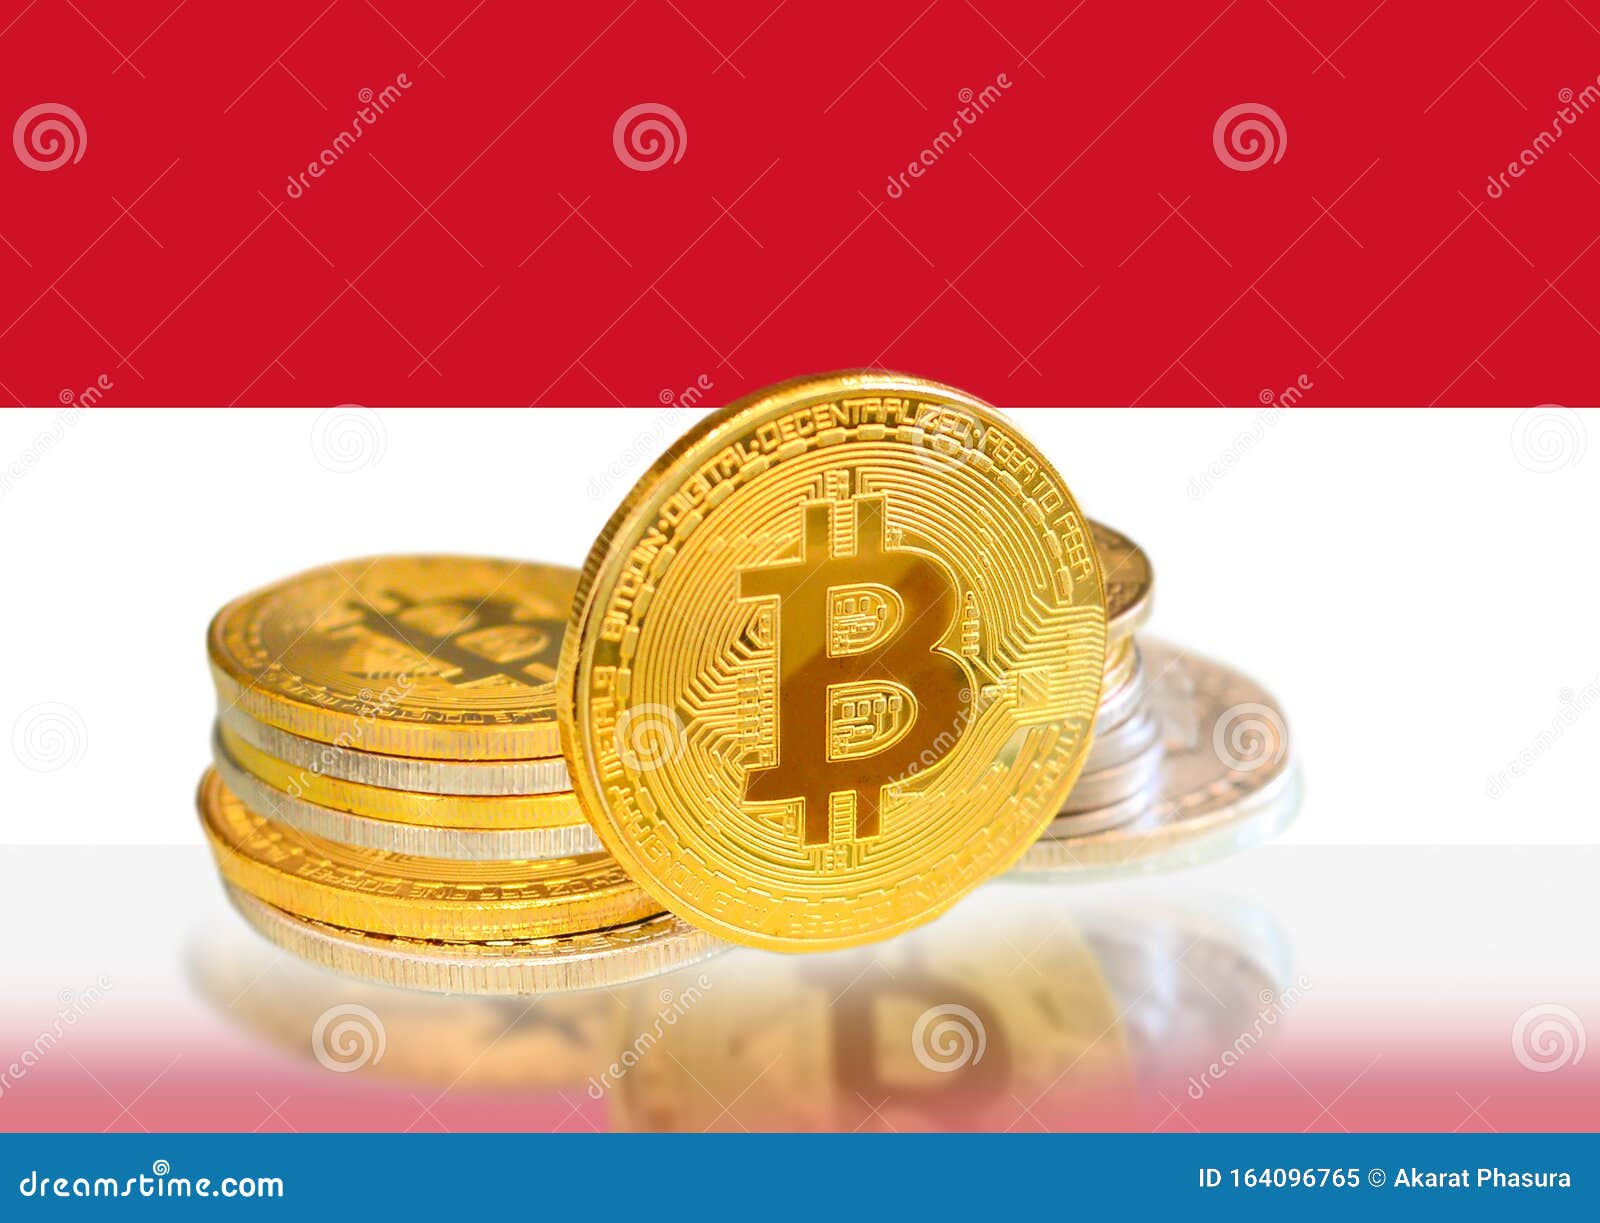 indonesian crypto coin